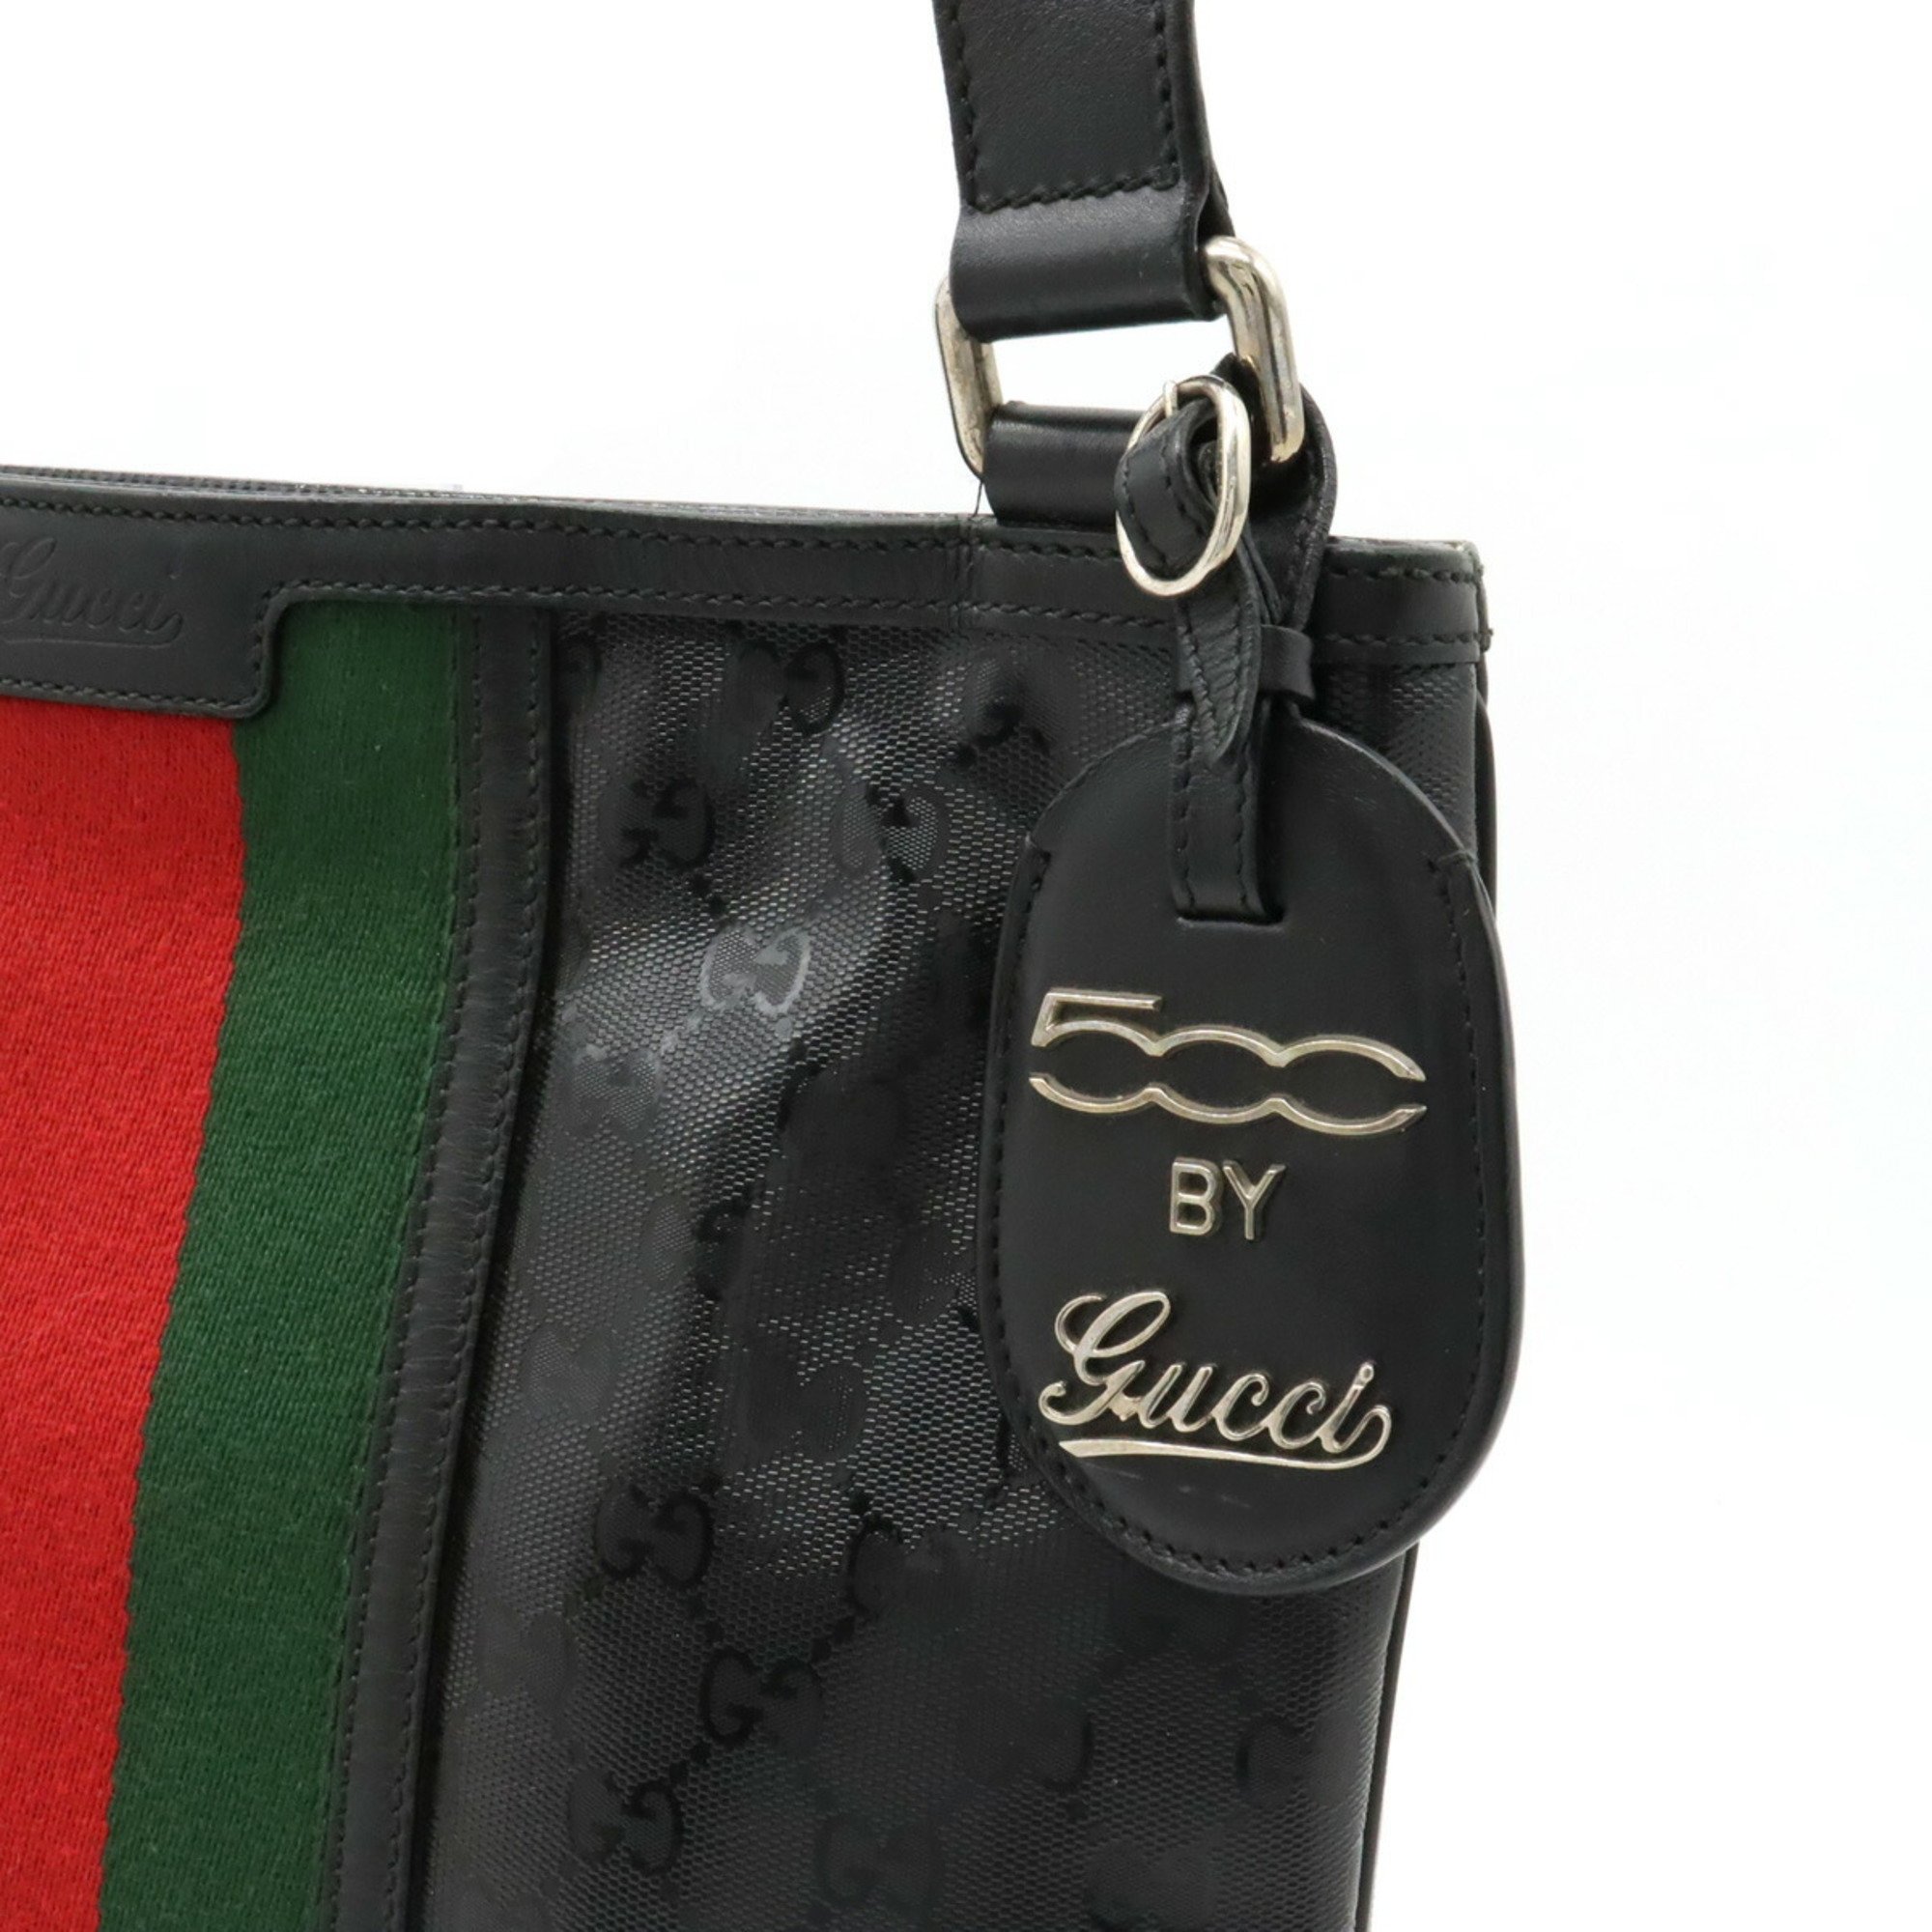 GUCCI GG Impreme Sherry Line FIAT 500 Fiat Collaboration Shoulder Bag PVC Leather Black 269379